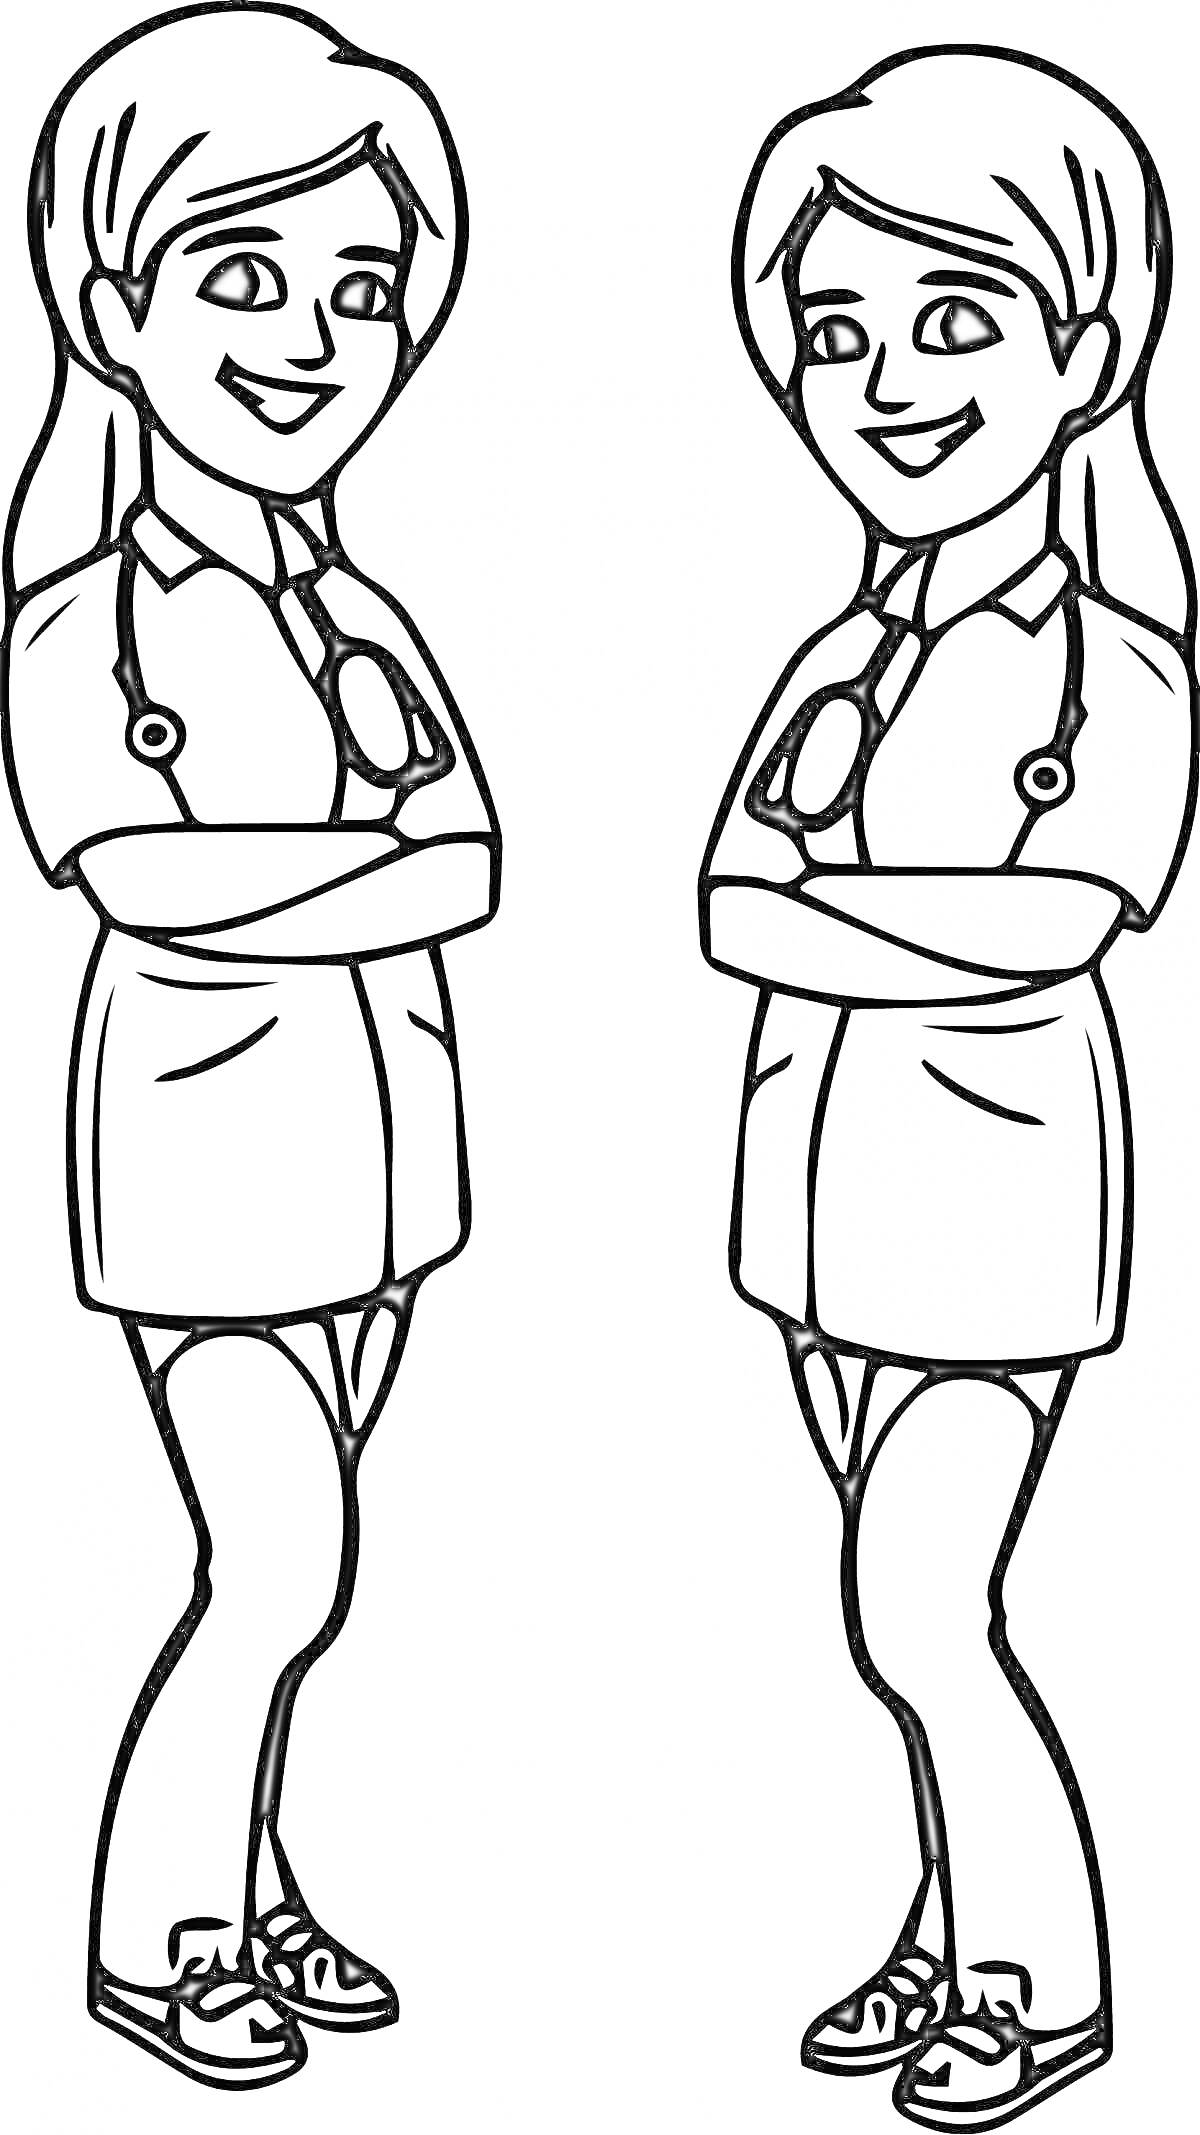 Раскраска Две девушки-врачи в медицинских халатах со стетоскопами на шее